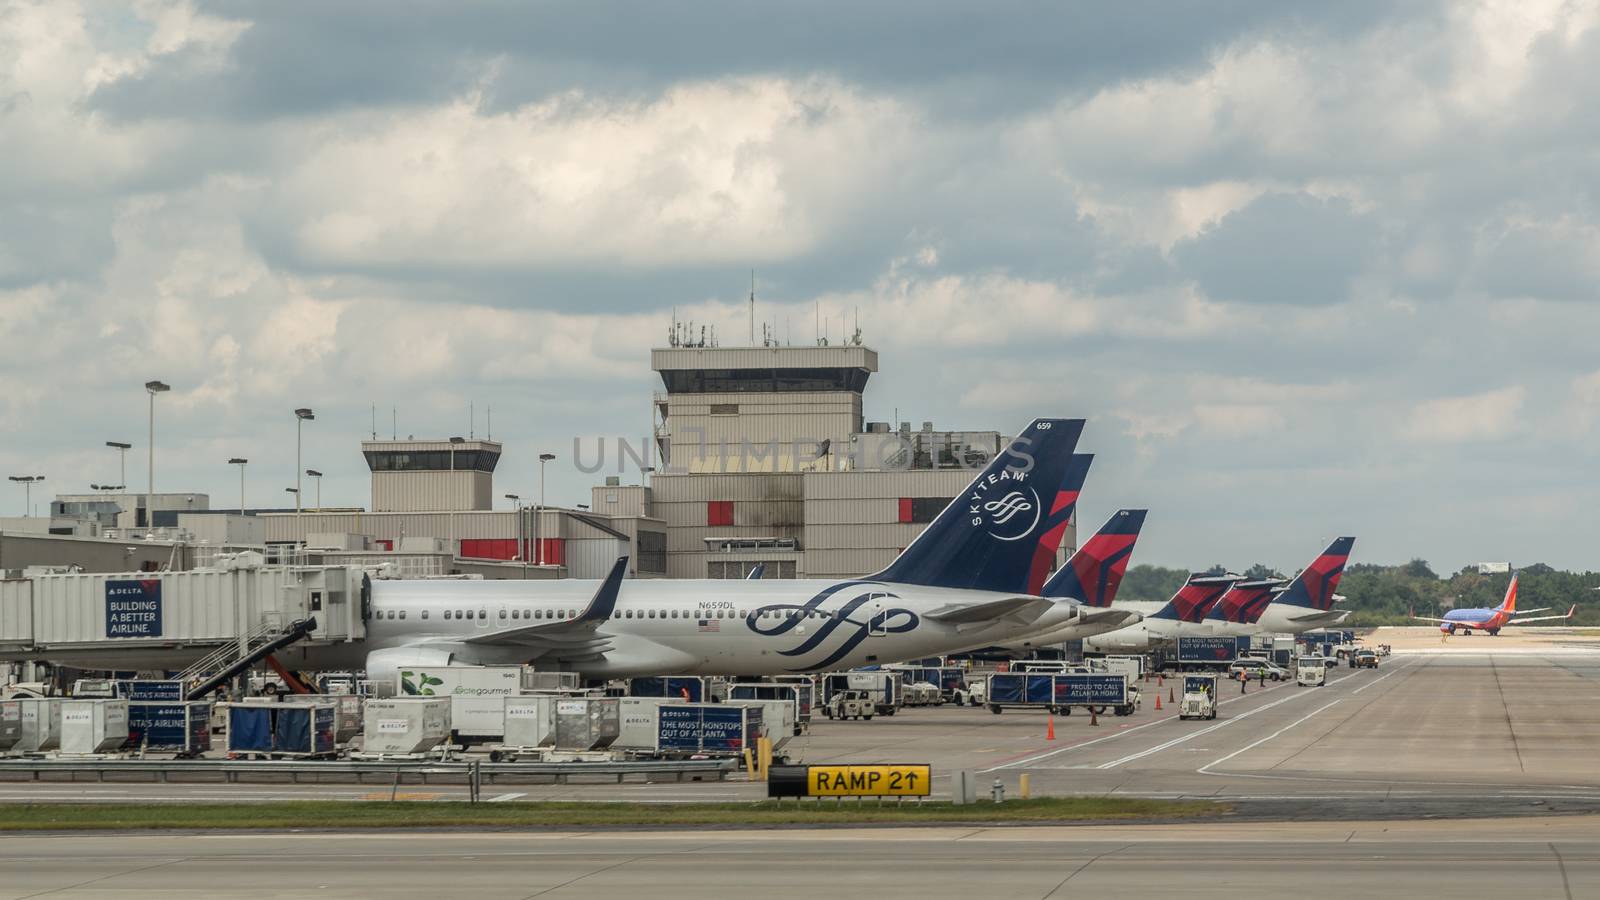 Atlanta - Aug 30: Several Delta airline planes load thousands of passengers at Atlanta International Airport on August 30, 2014 in Atlanta, Georgia.